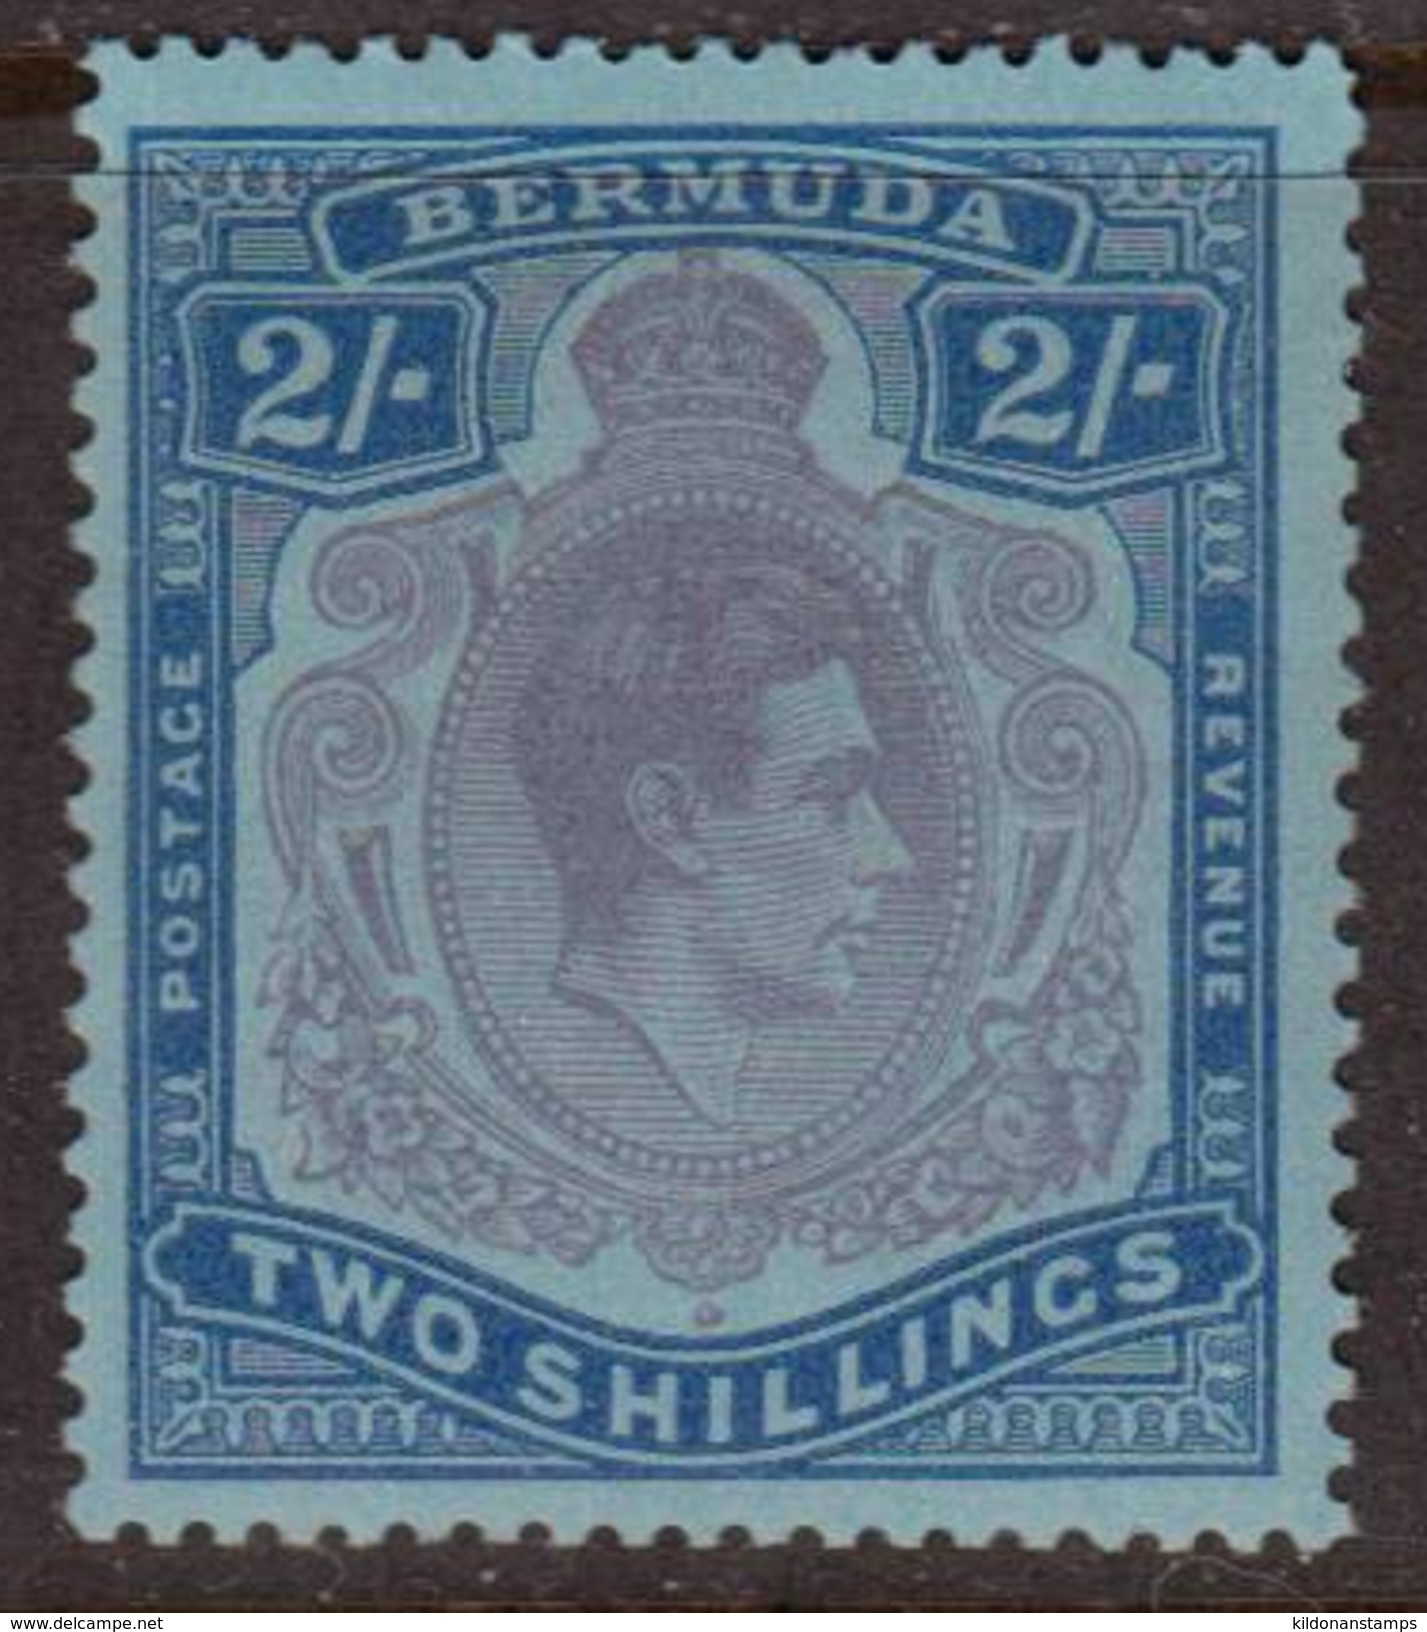 Bermuda 1950 George VI, Mint No Hinge, Sc# 123, SG 116e - Bermuda